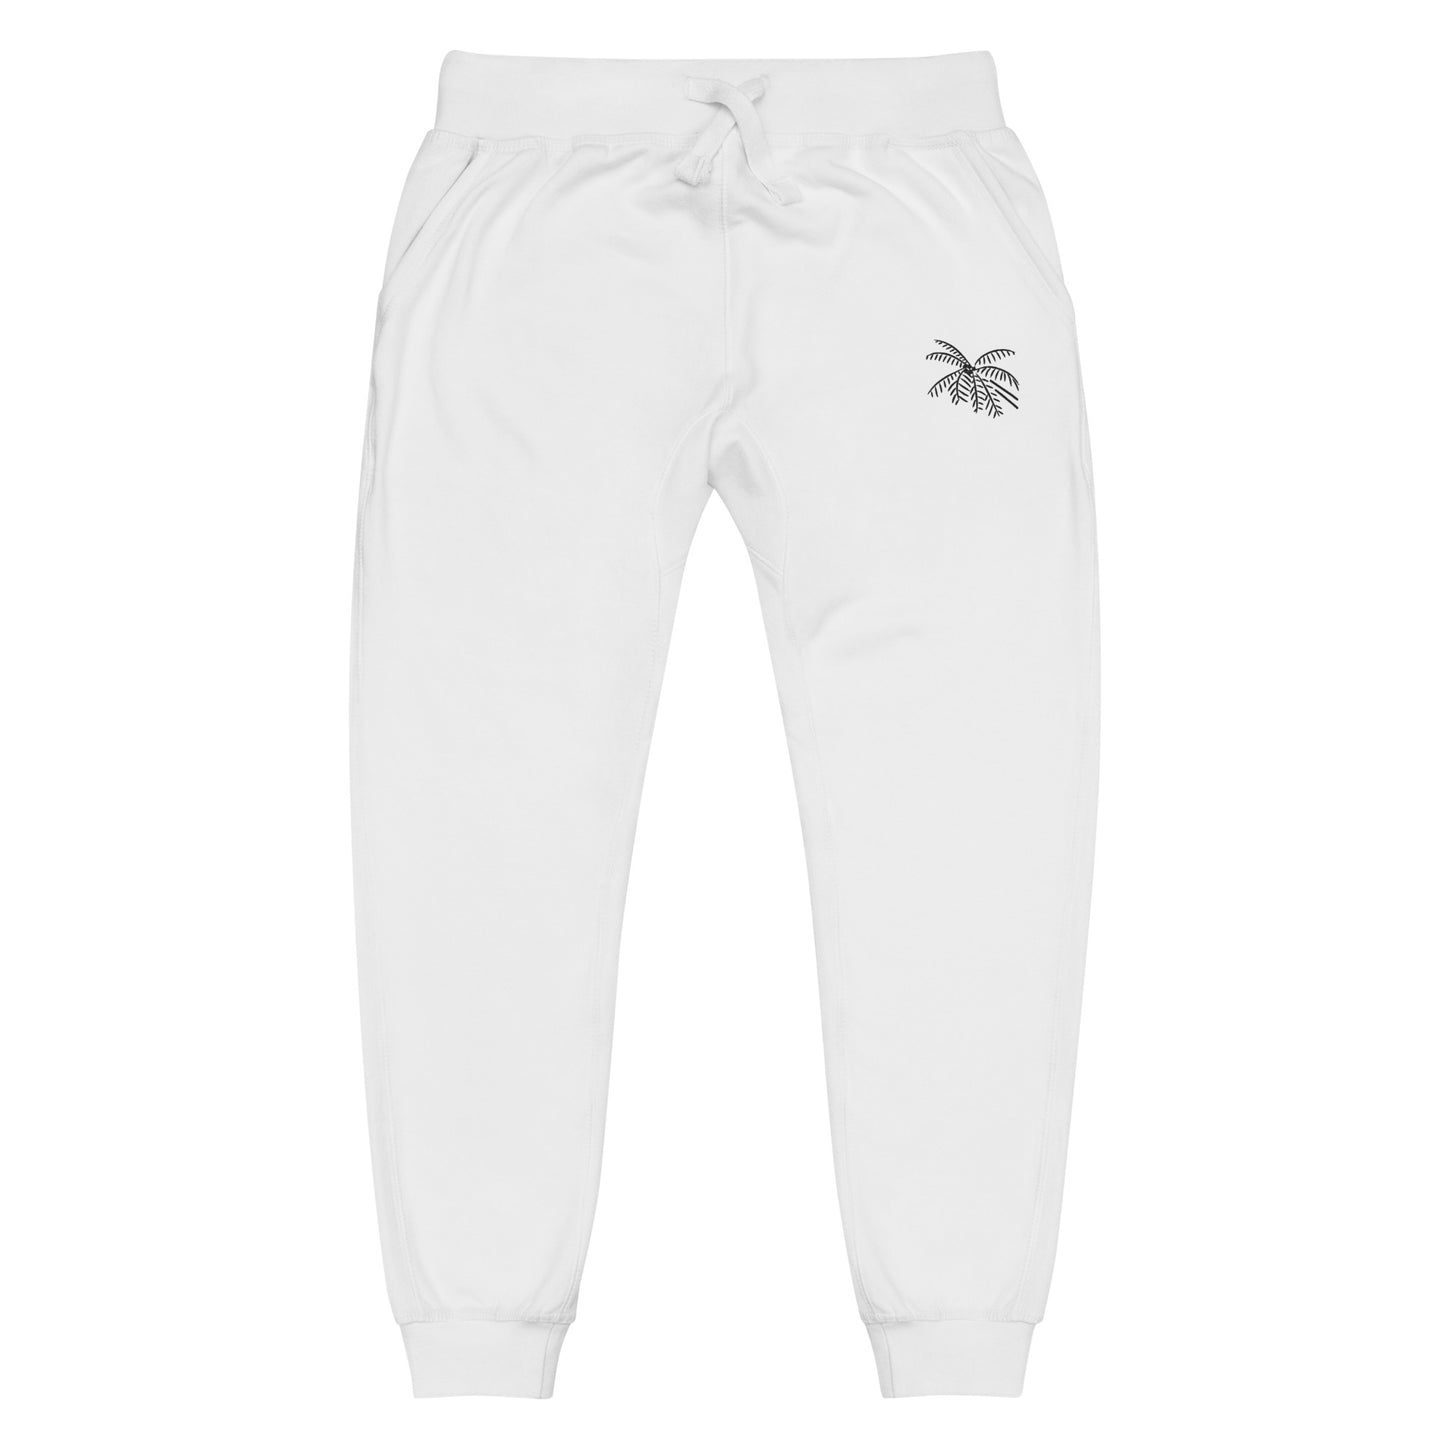 Jadenbree Embroidered Unisex White Fleece Sweatpants